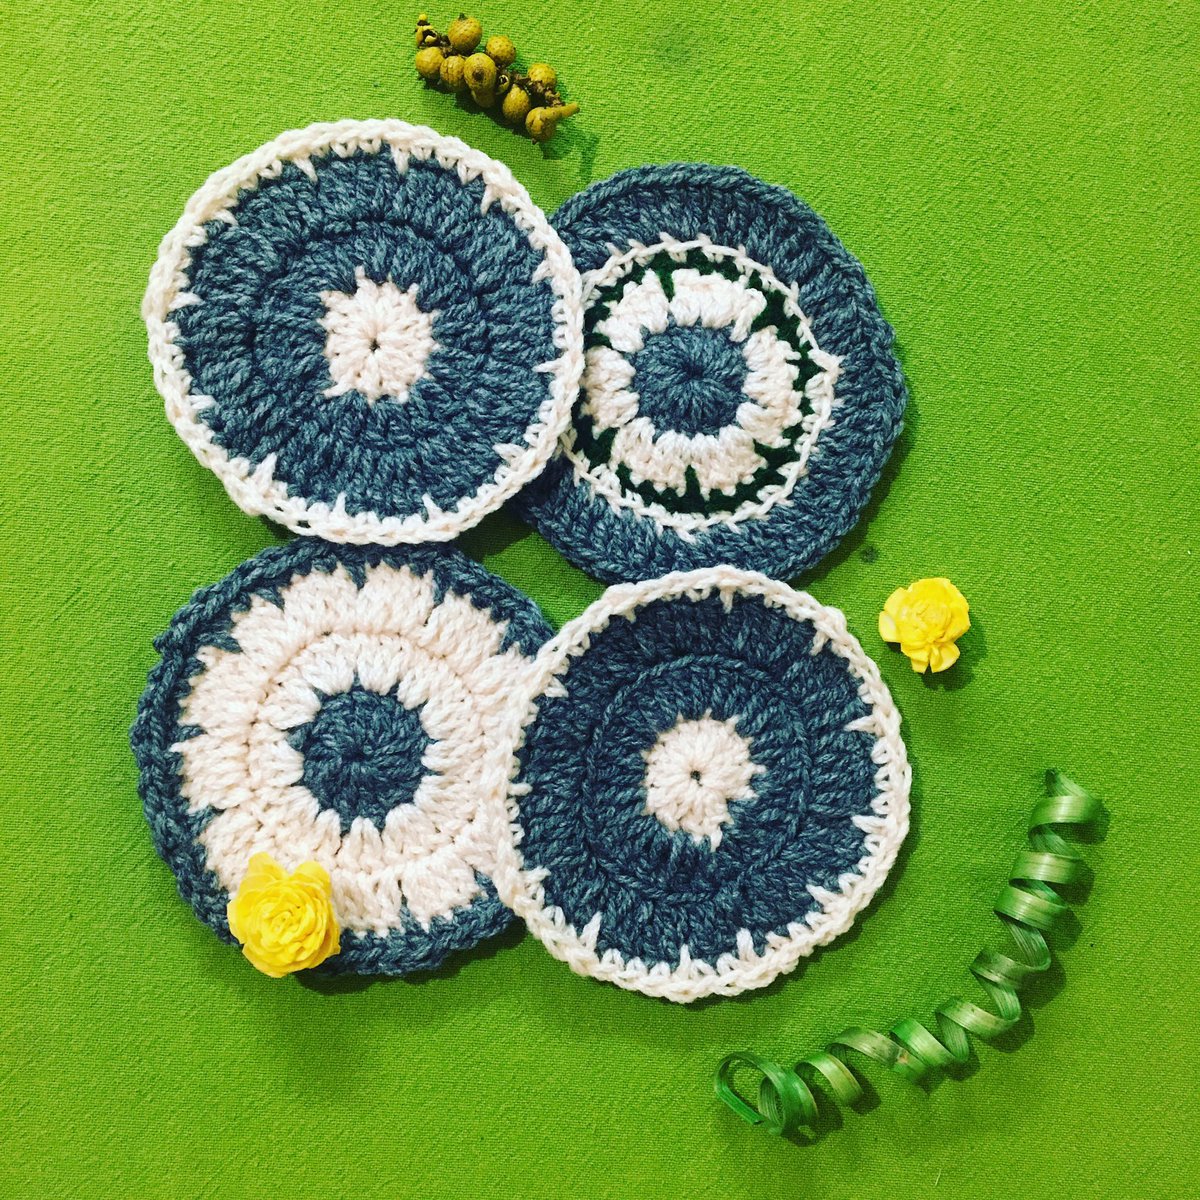 Set of four #coasters, ready to go out.

#TableCoasters

#Crochet #yarnaddict #yarnspirations #yarnaddiction #yarncolours #knittersofinstagram #instacrochet #crochetlove #crocheteers 
#shareyourcrochet #knitspiration #knitting_inspiration #woolweek